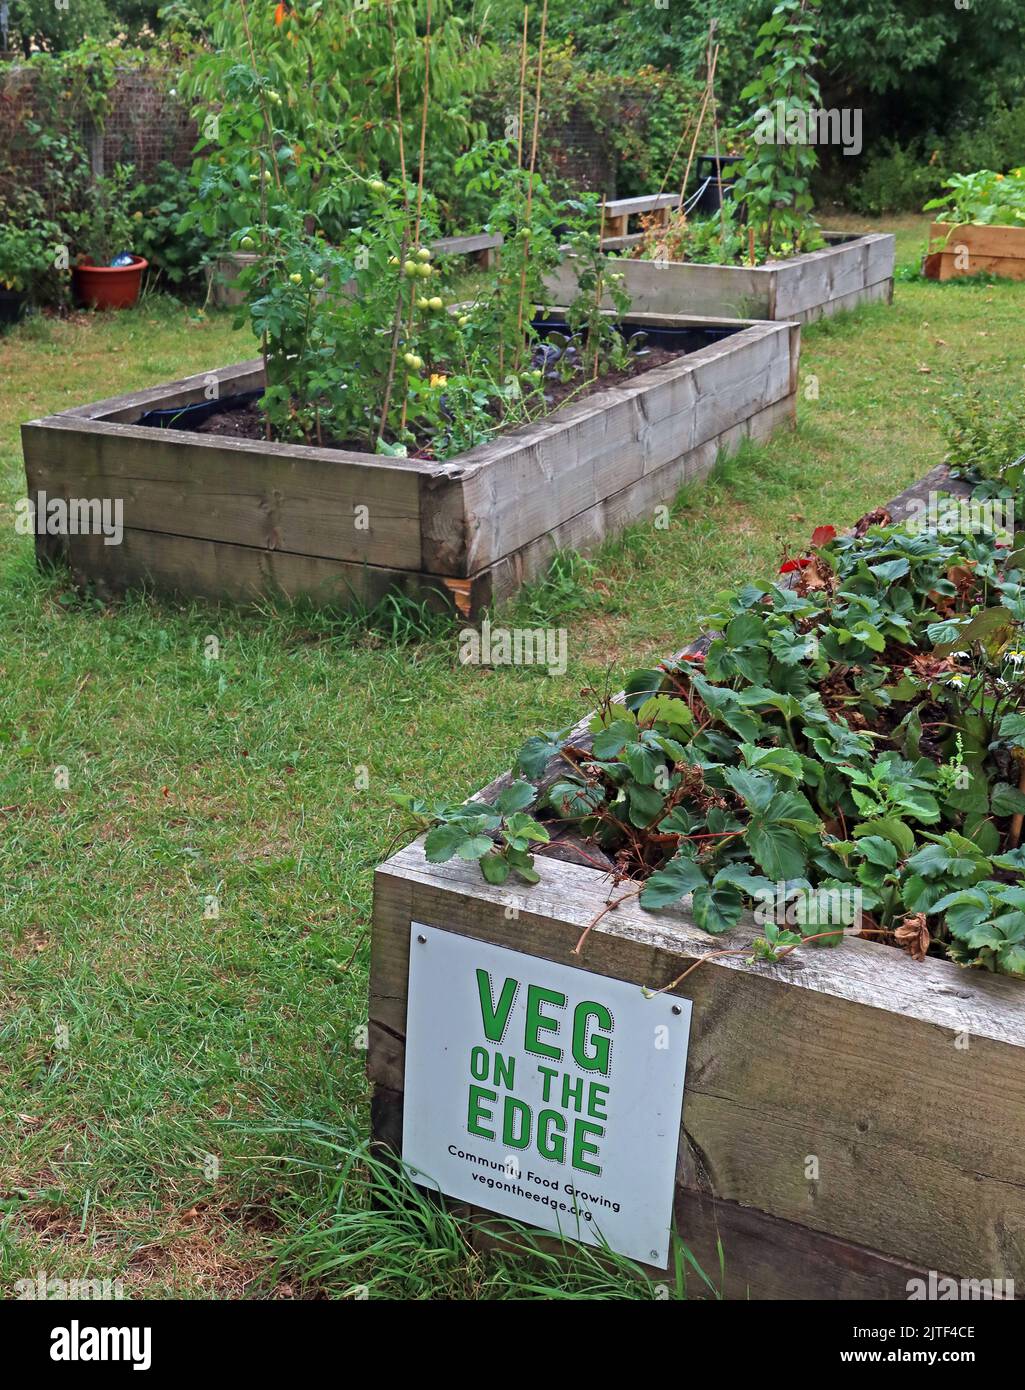 Veg On The Edge,community food growing at Saltaire, Shipley, Bradford, West Yorkshire,England, UK, BD18 3HU Stock Photo